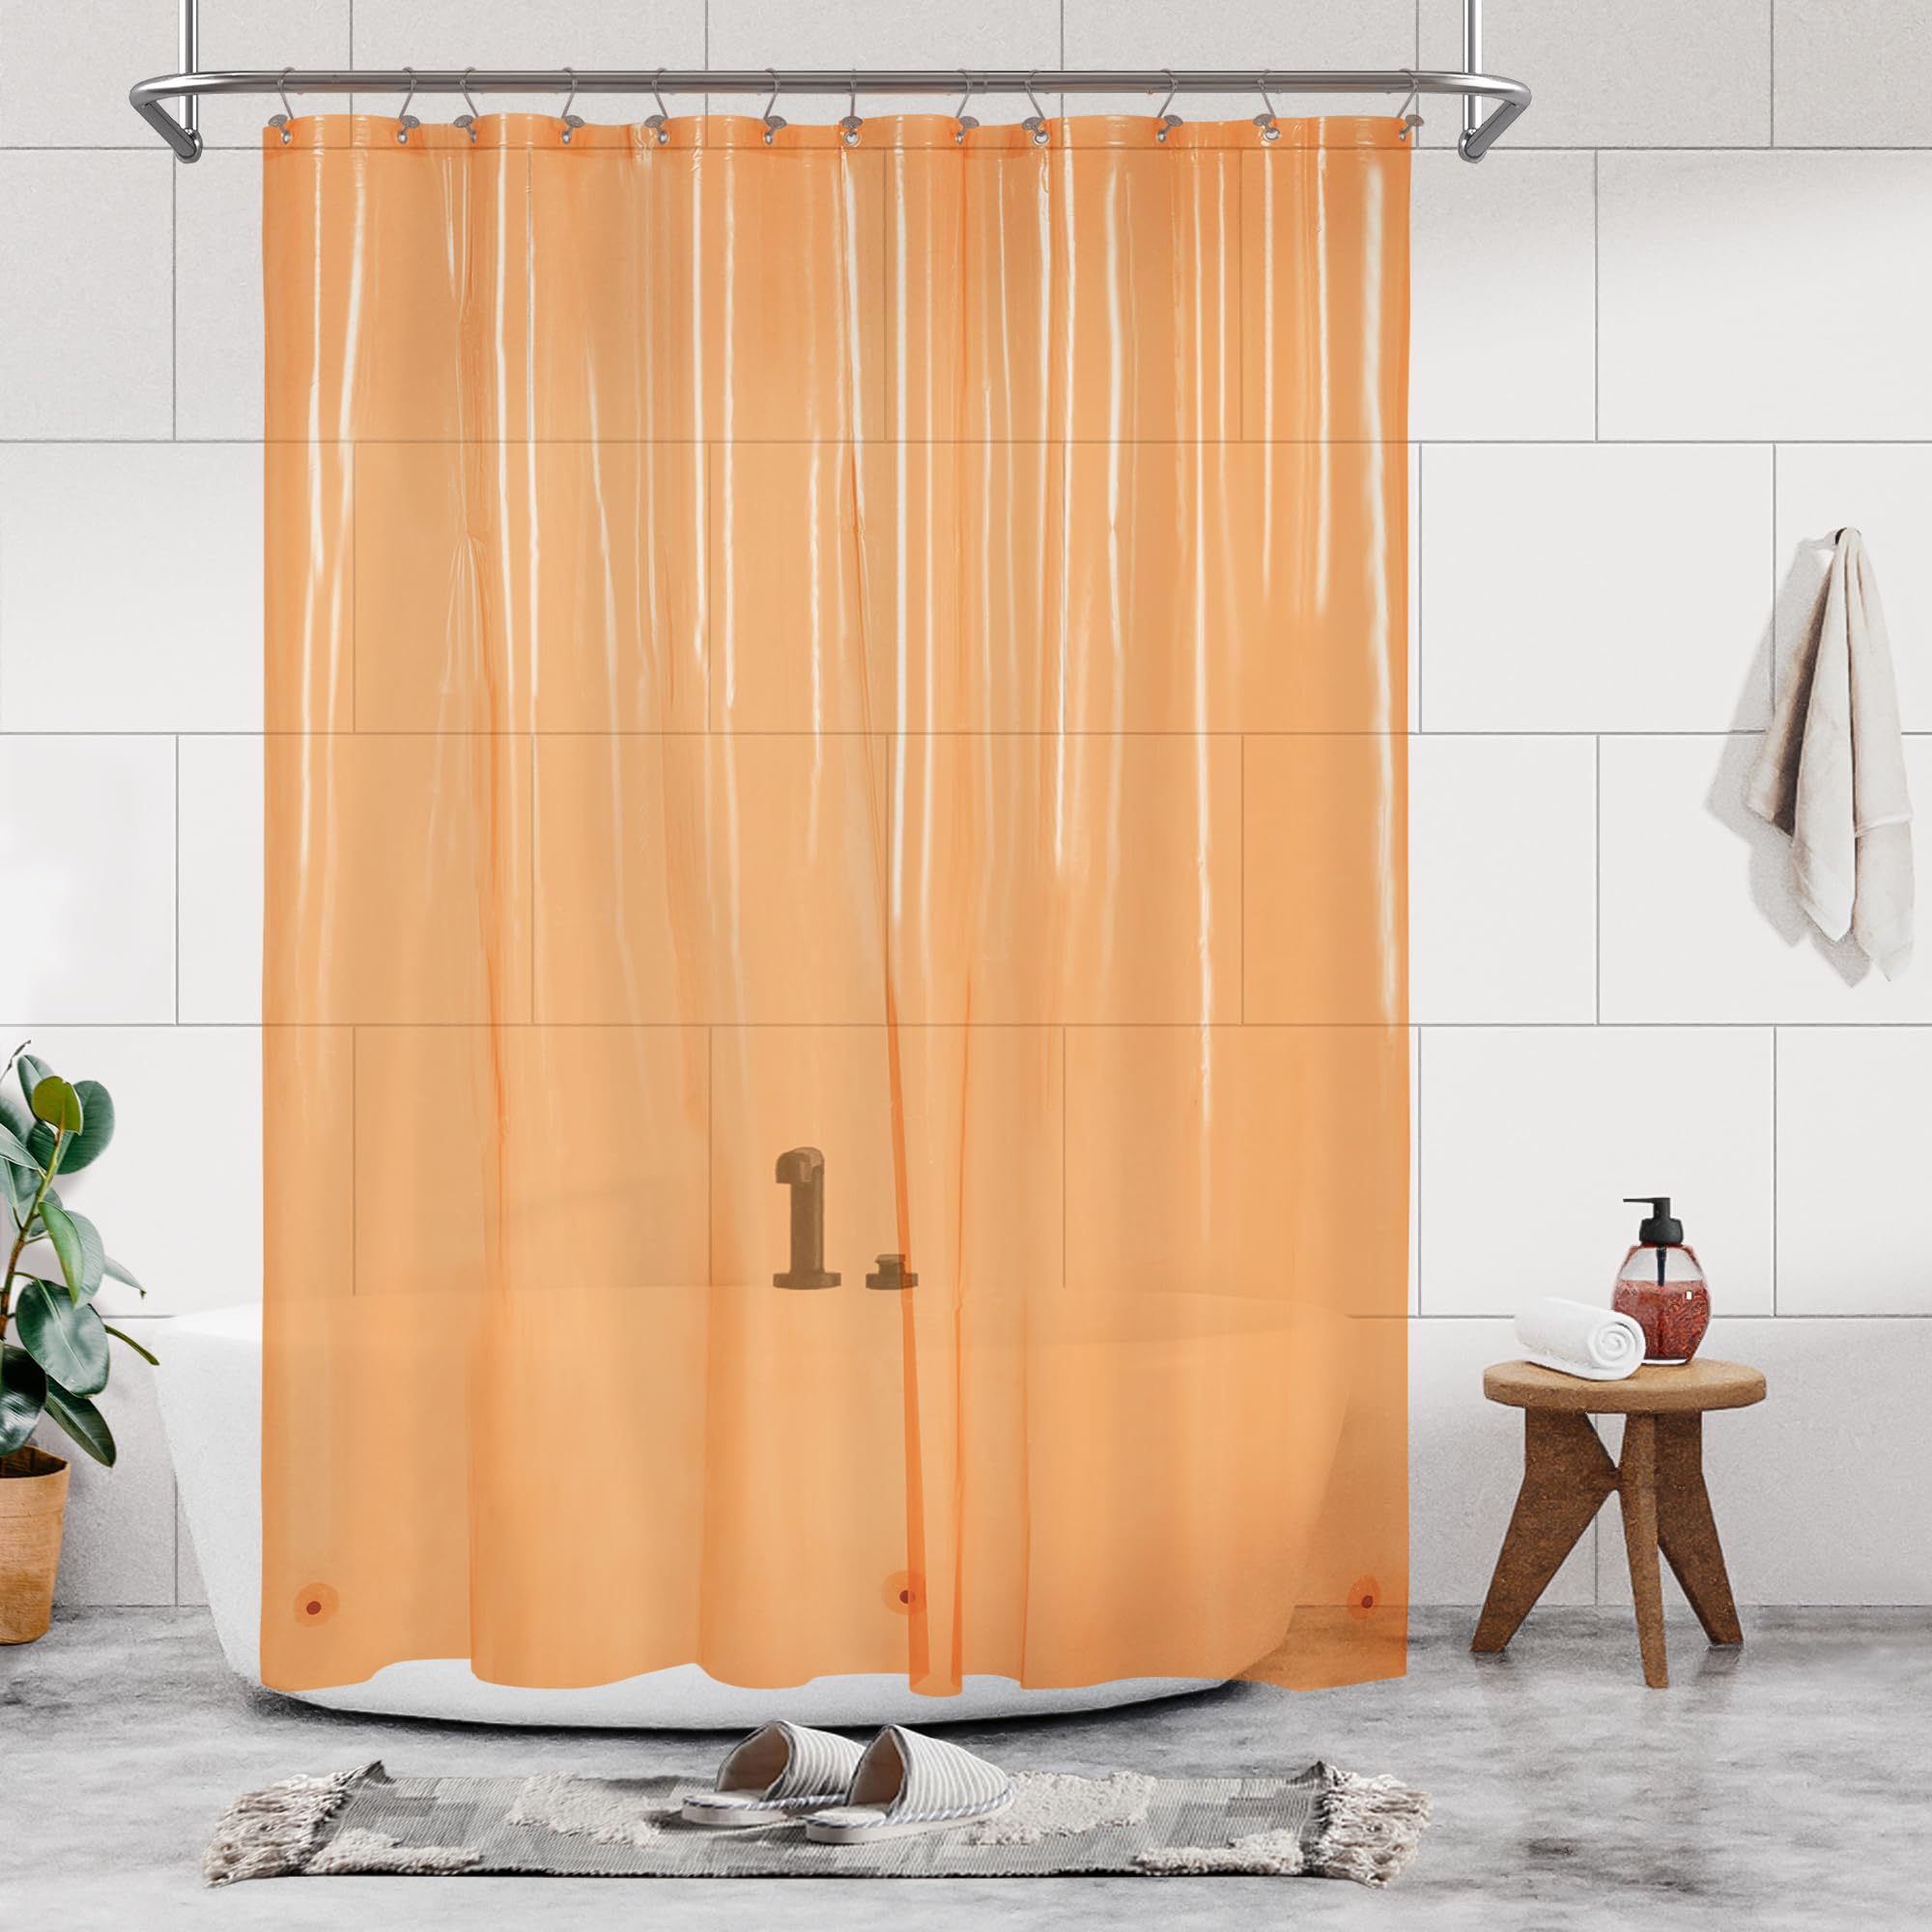 Barossa Design Clear Orange Shower Curtain Liner - Premium PEVA Shower Liner with 3 Magnets & Metal Grommets, Waterproof Lightweight Standard Size Liners for Bathroom - Translucent Orange